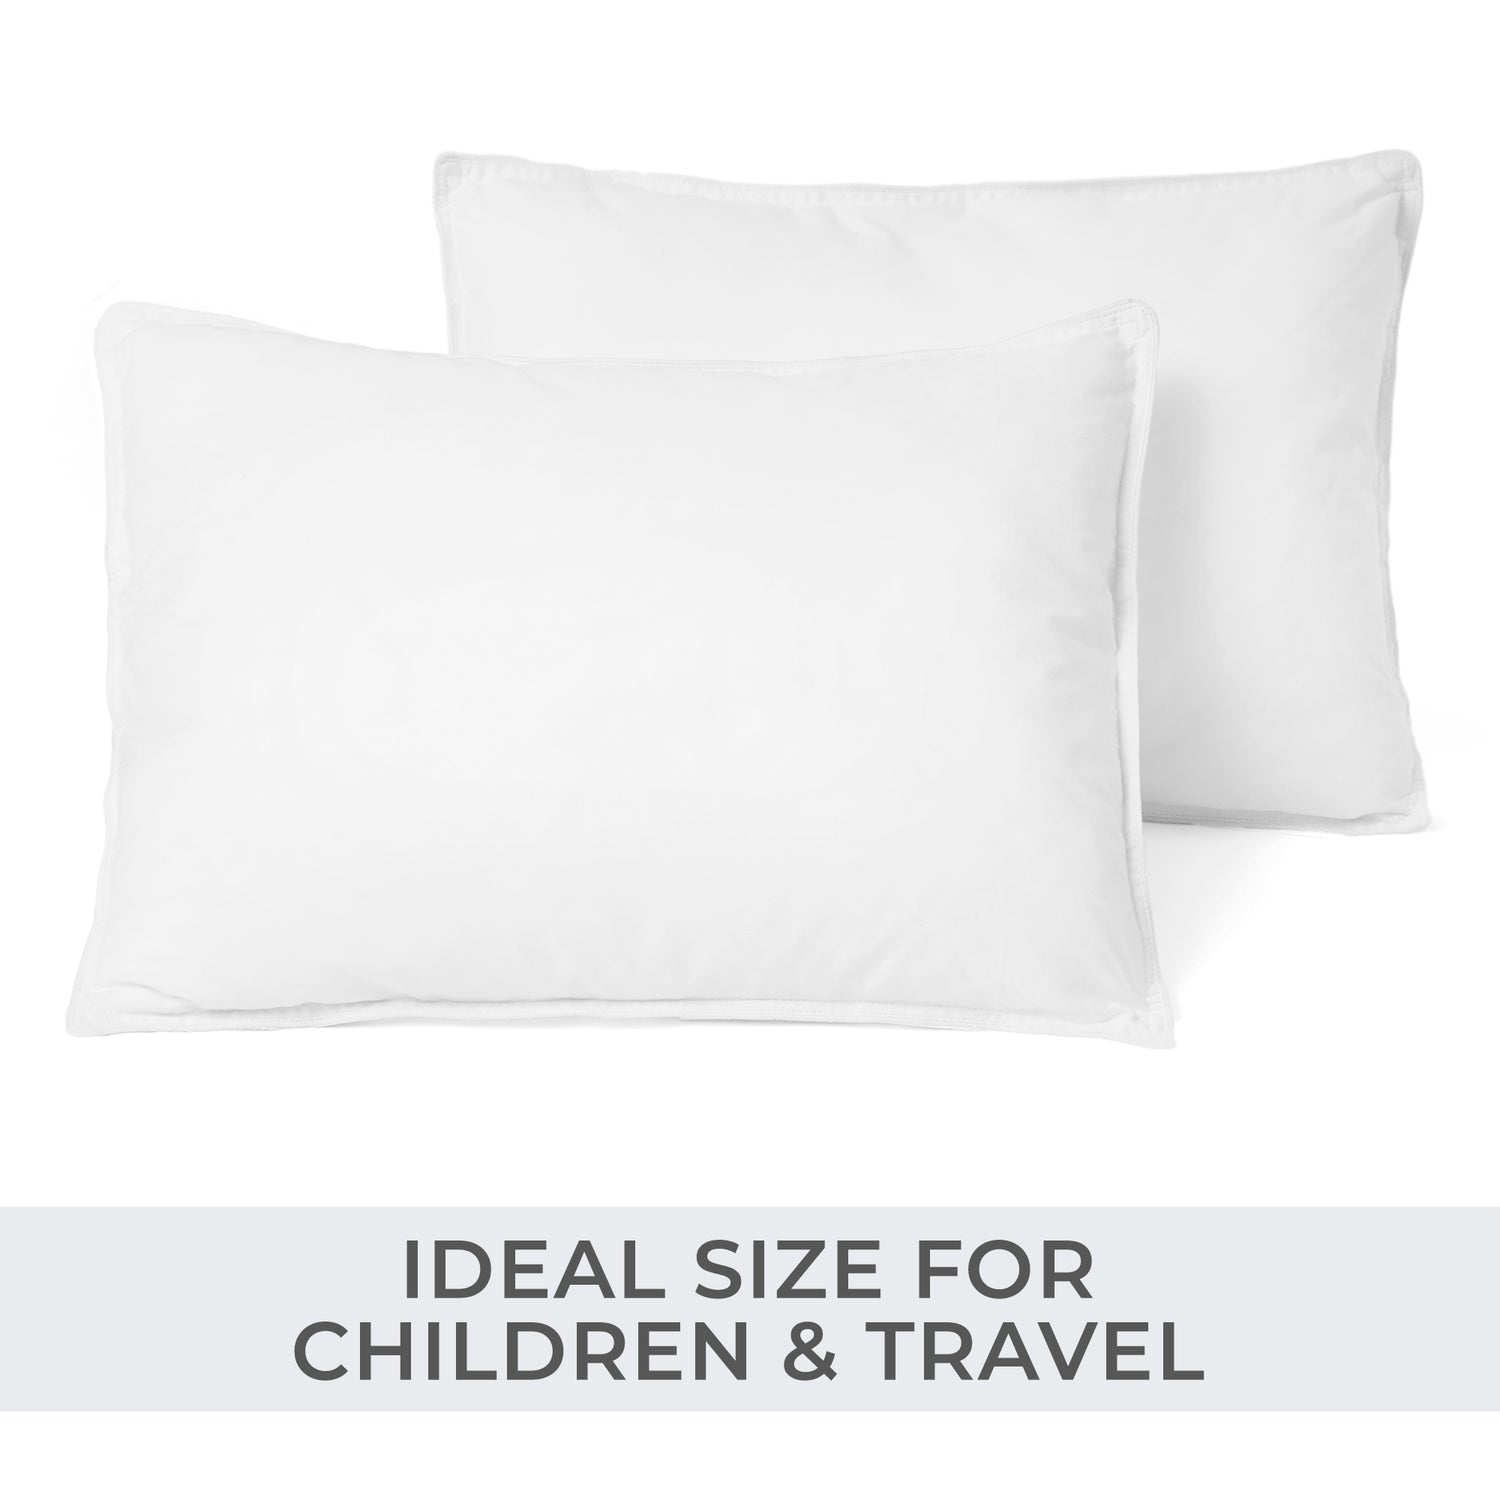 Toddler Pillow With Bonus Pillowcase